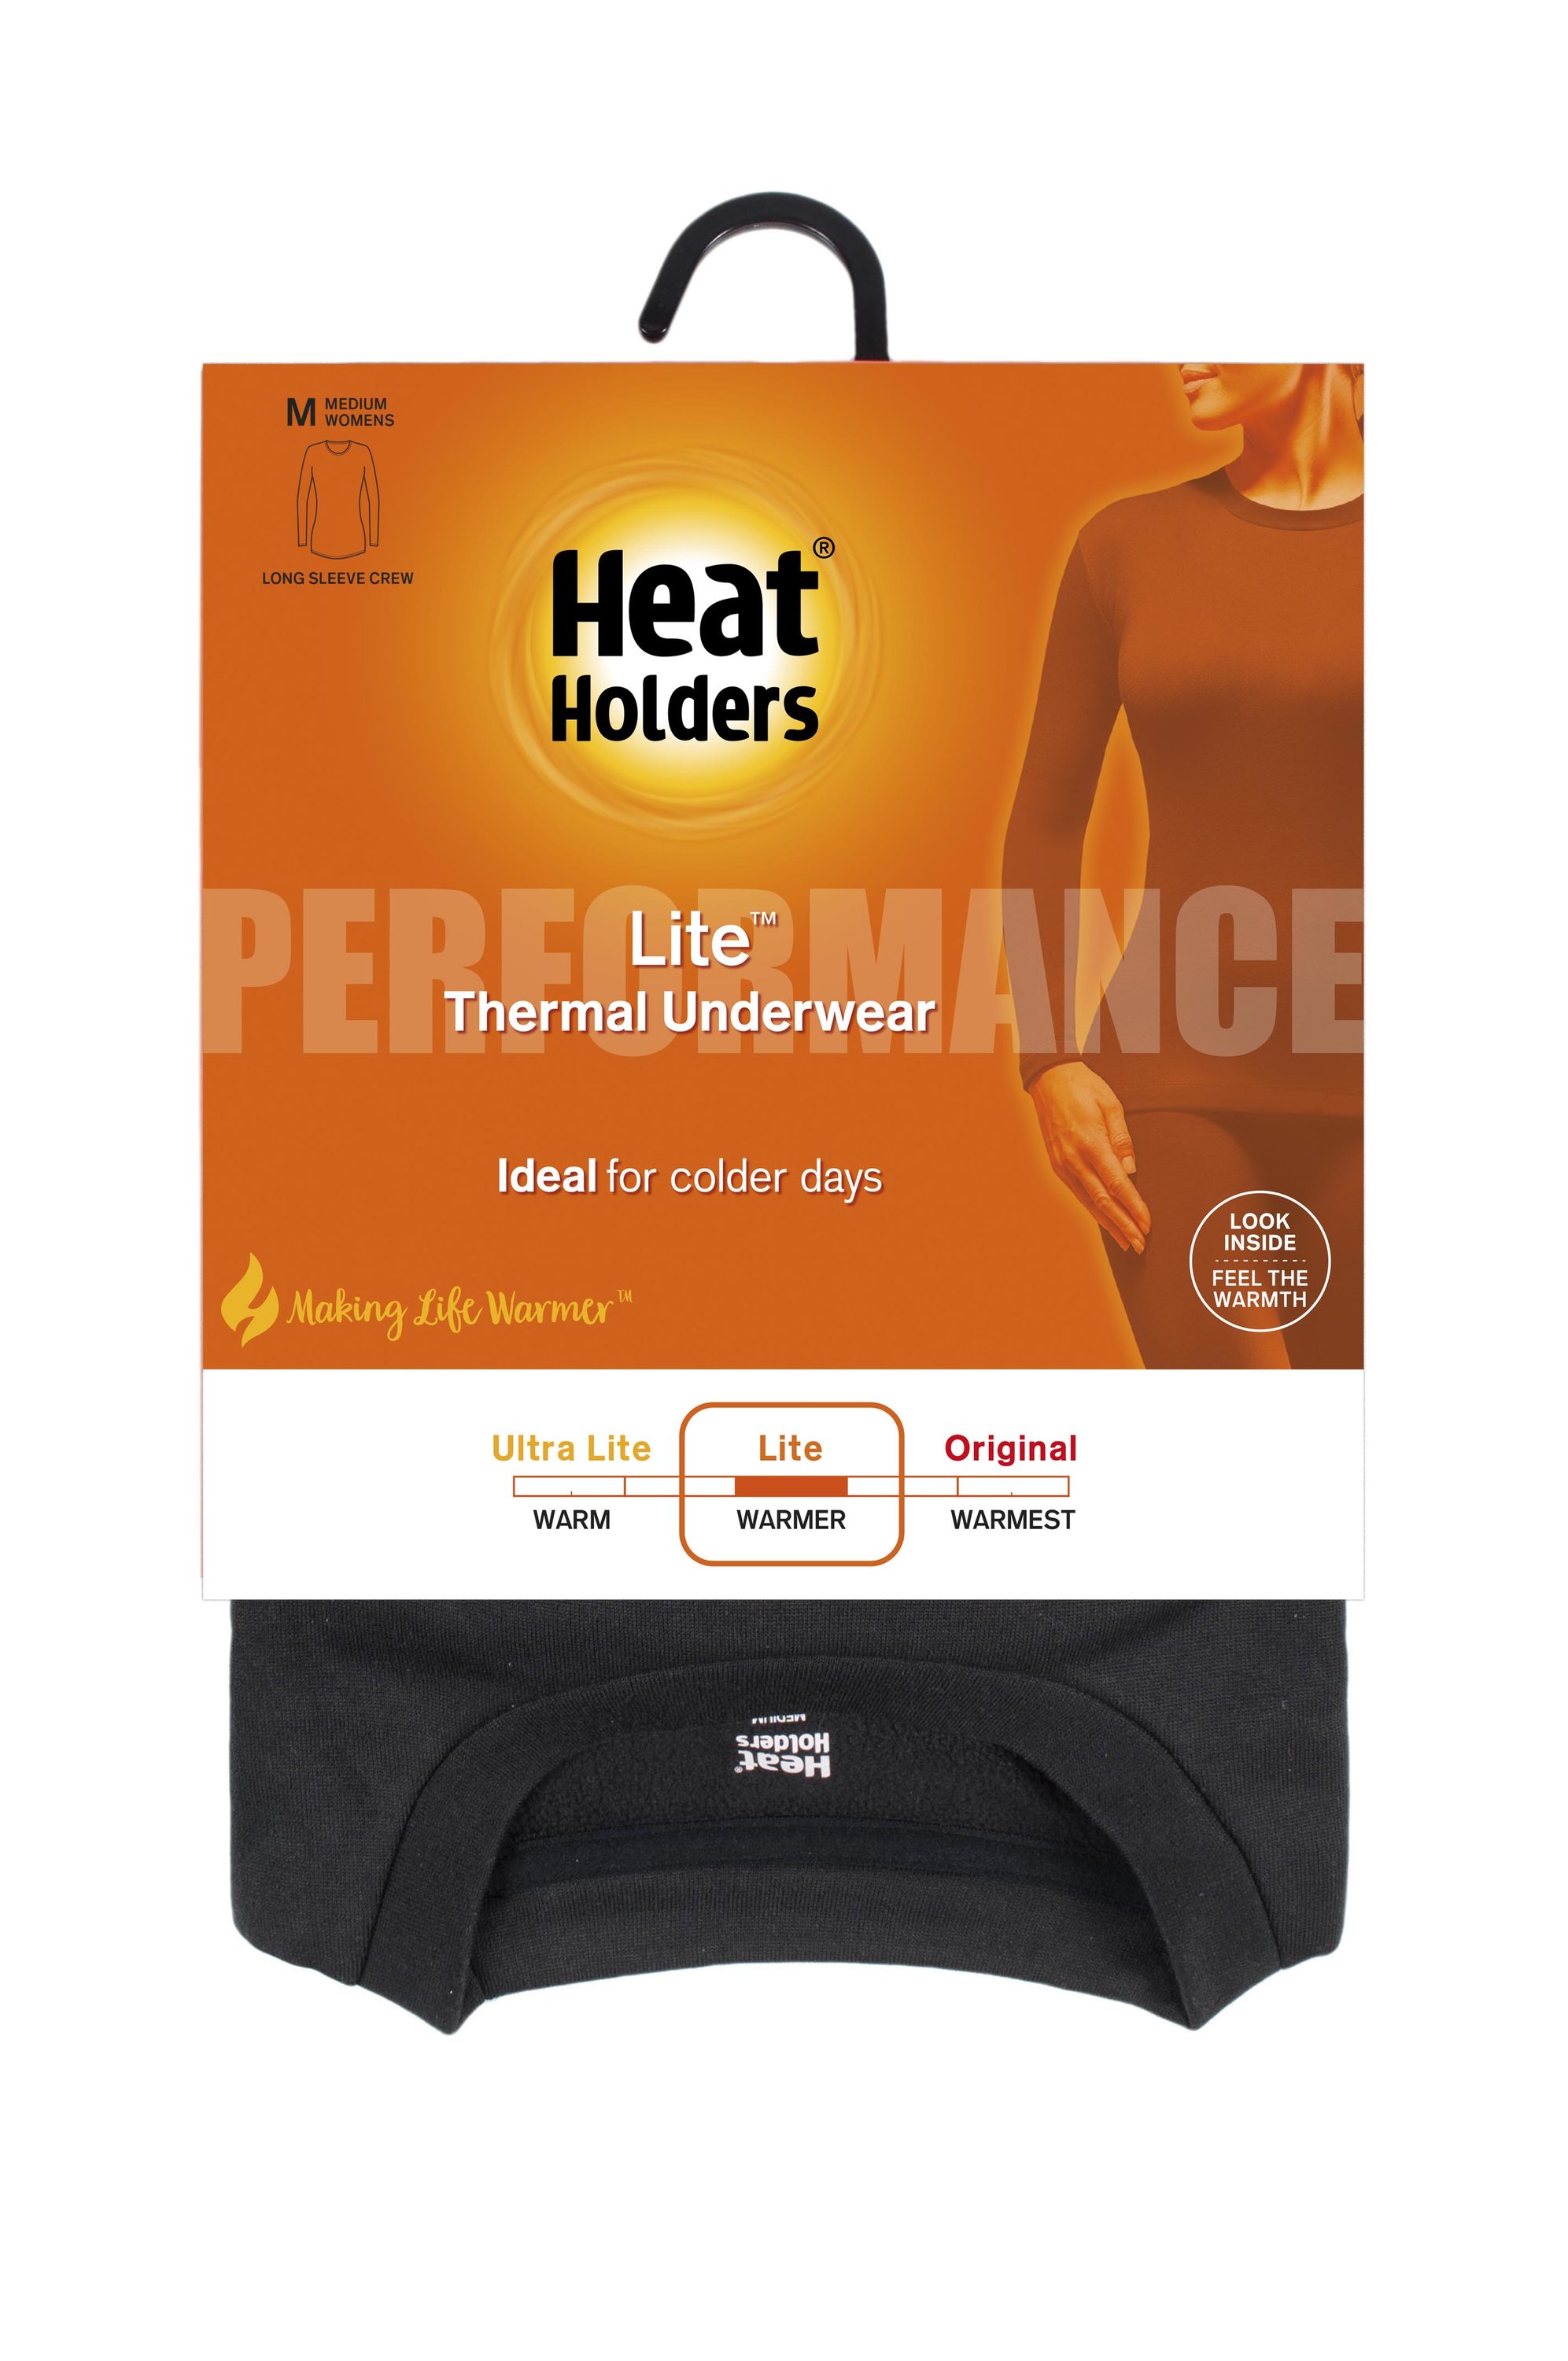 Heat Holders - Heat Holders thermal underwear will help